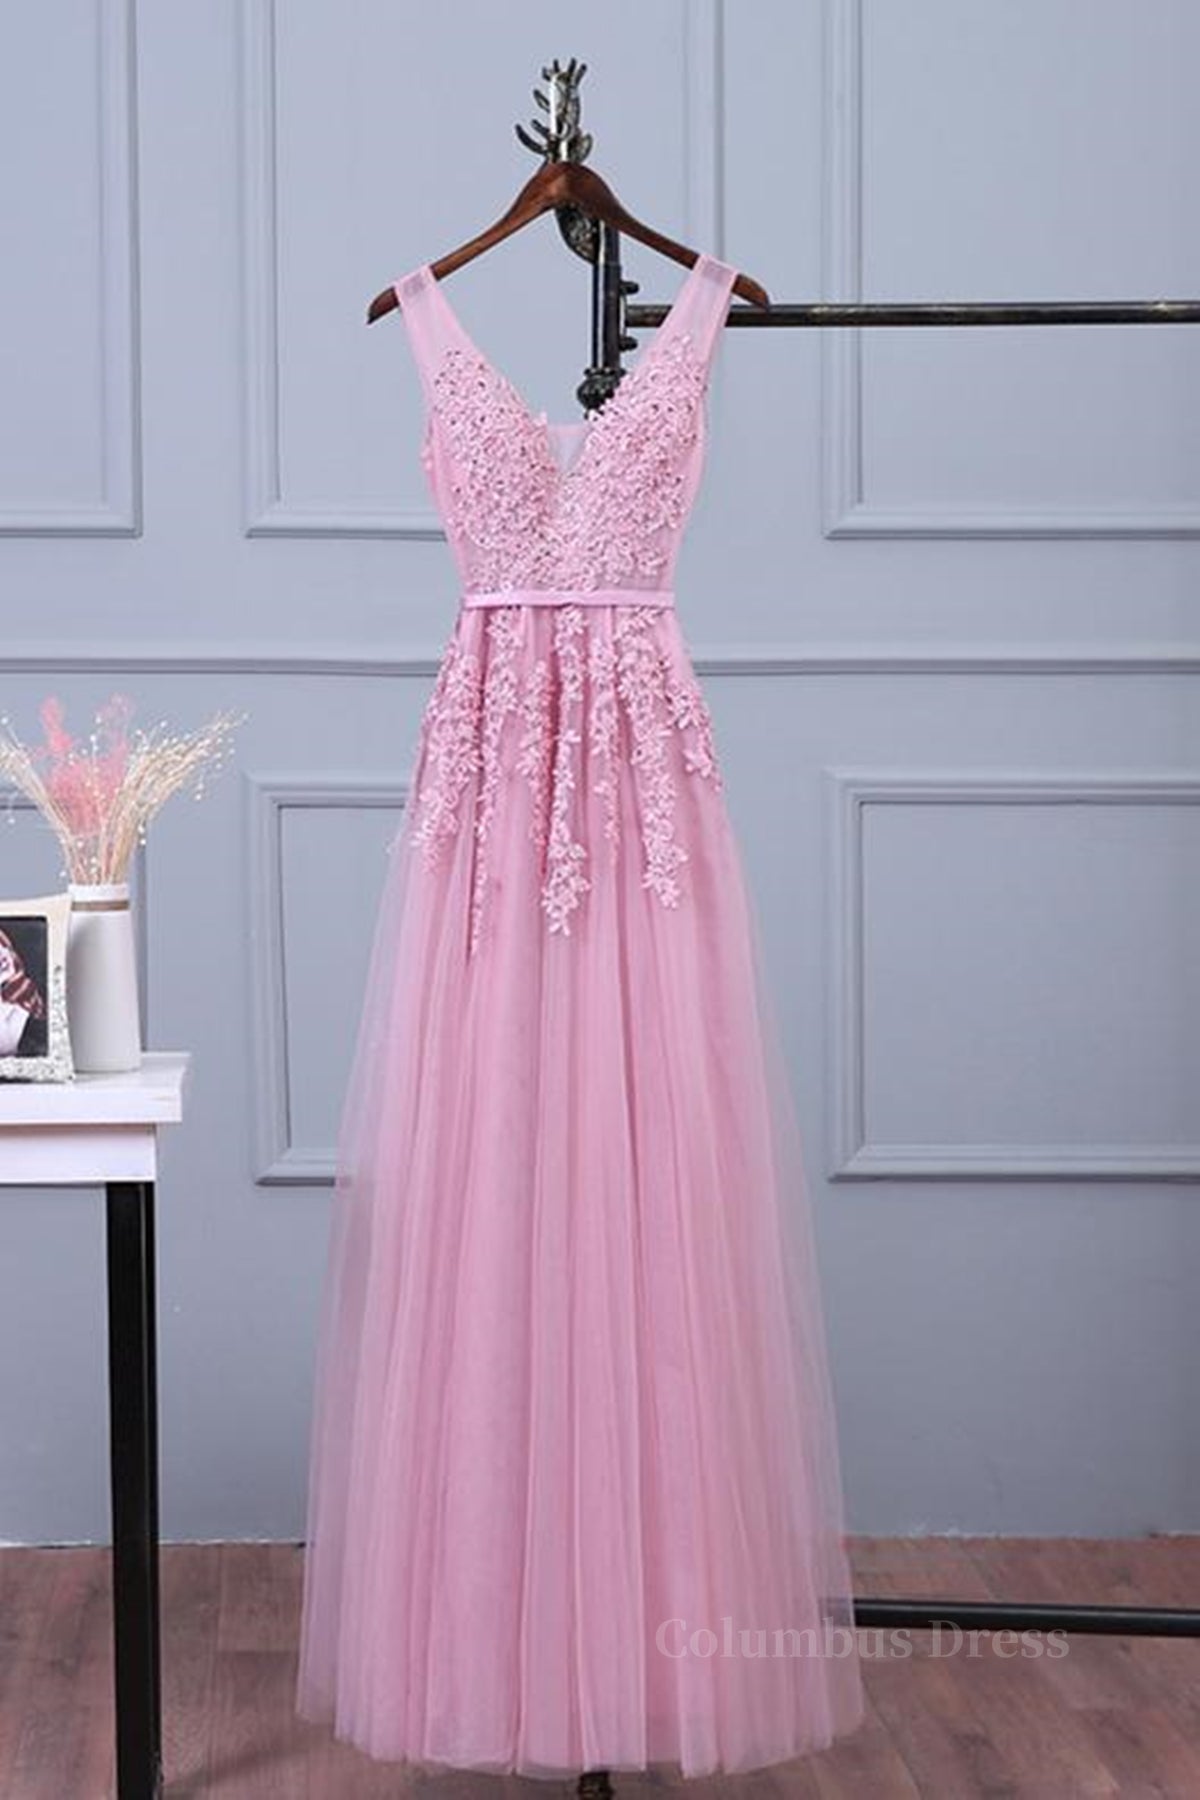 V Neck Pink Lace Corset Prom Dresses, Pink V Neck Lace Corset Bridesmaid Corset Formal Dresses outfit, Party Dress High Neck